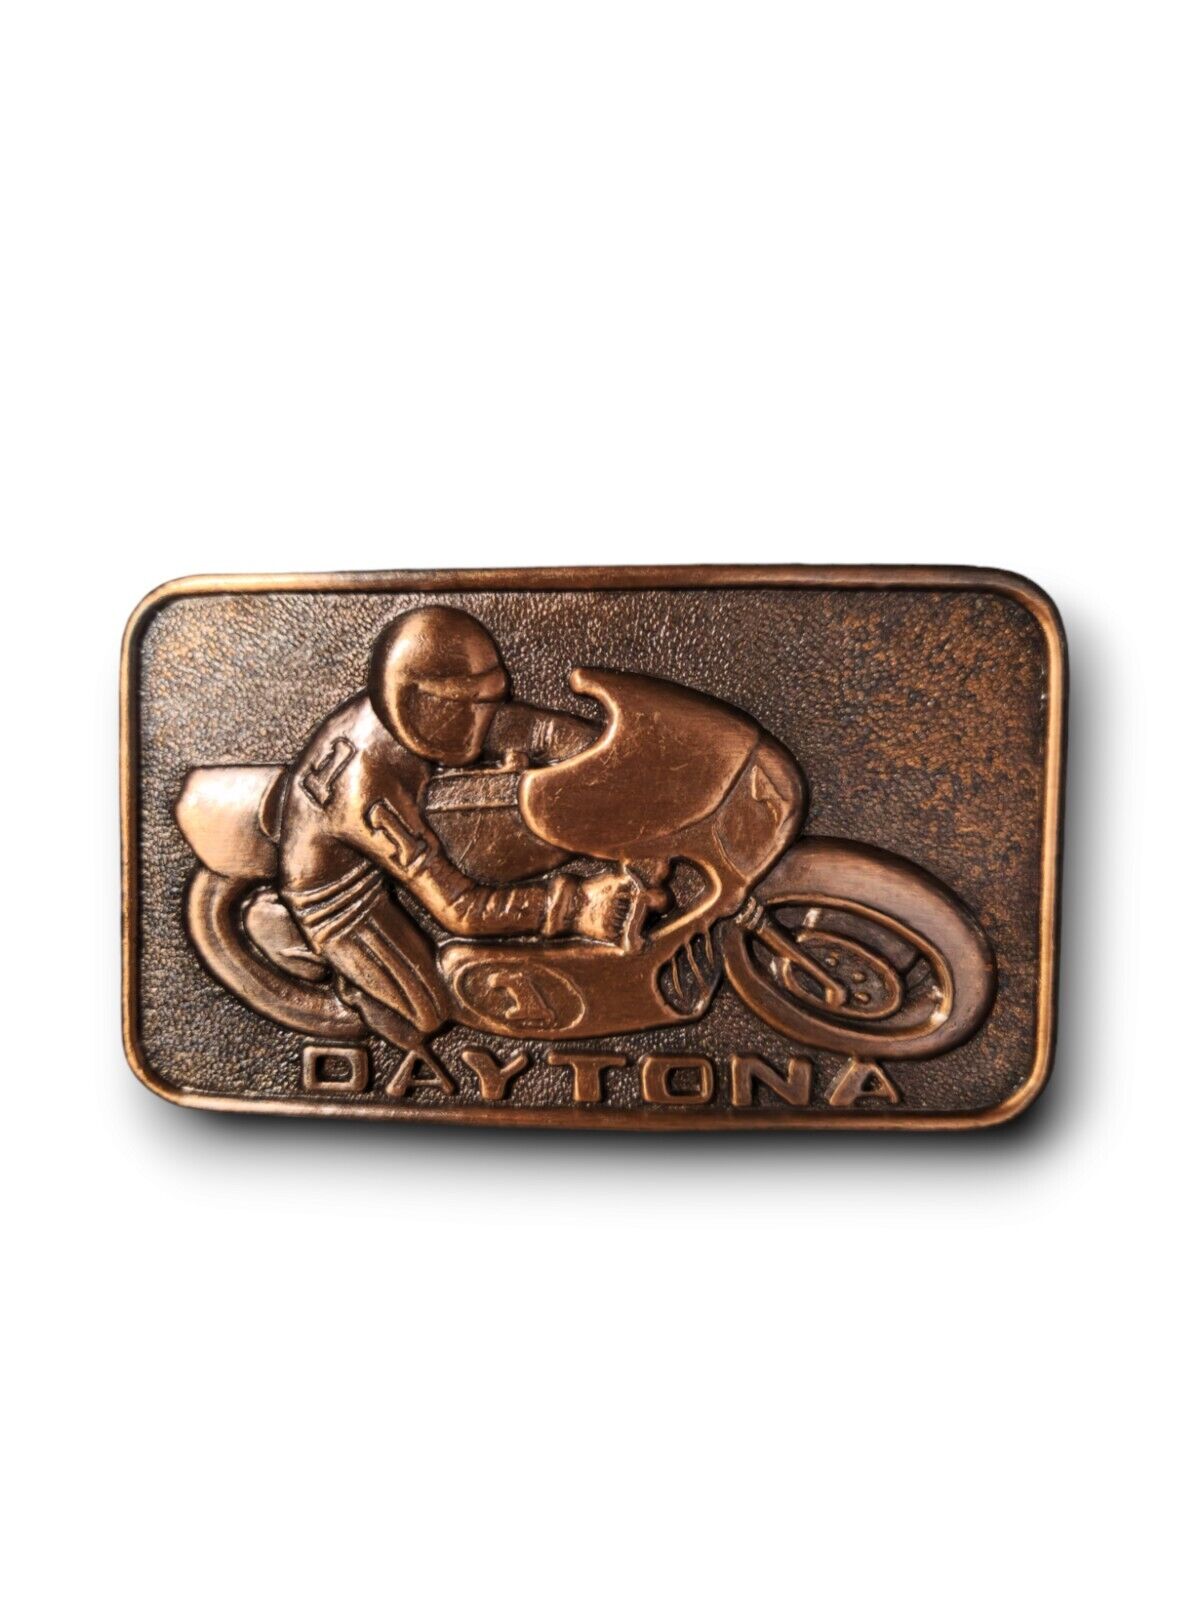 Vtg Daytona Motorcycle Racing Belt Buckle Florida Bike Week Speedway Biker 